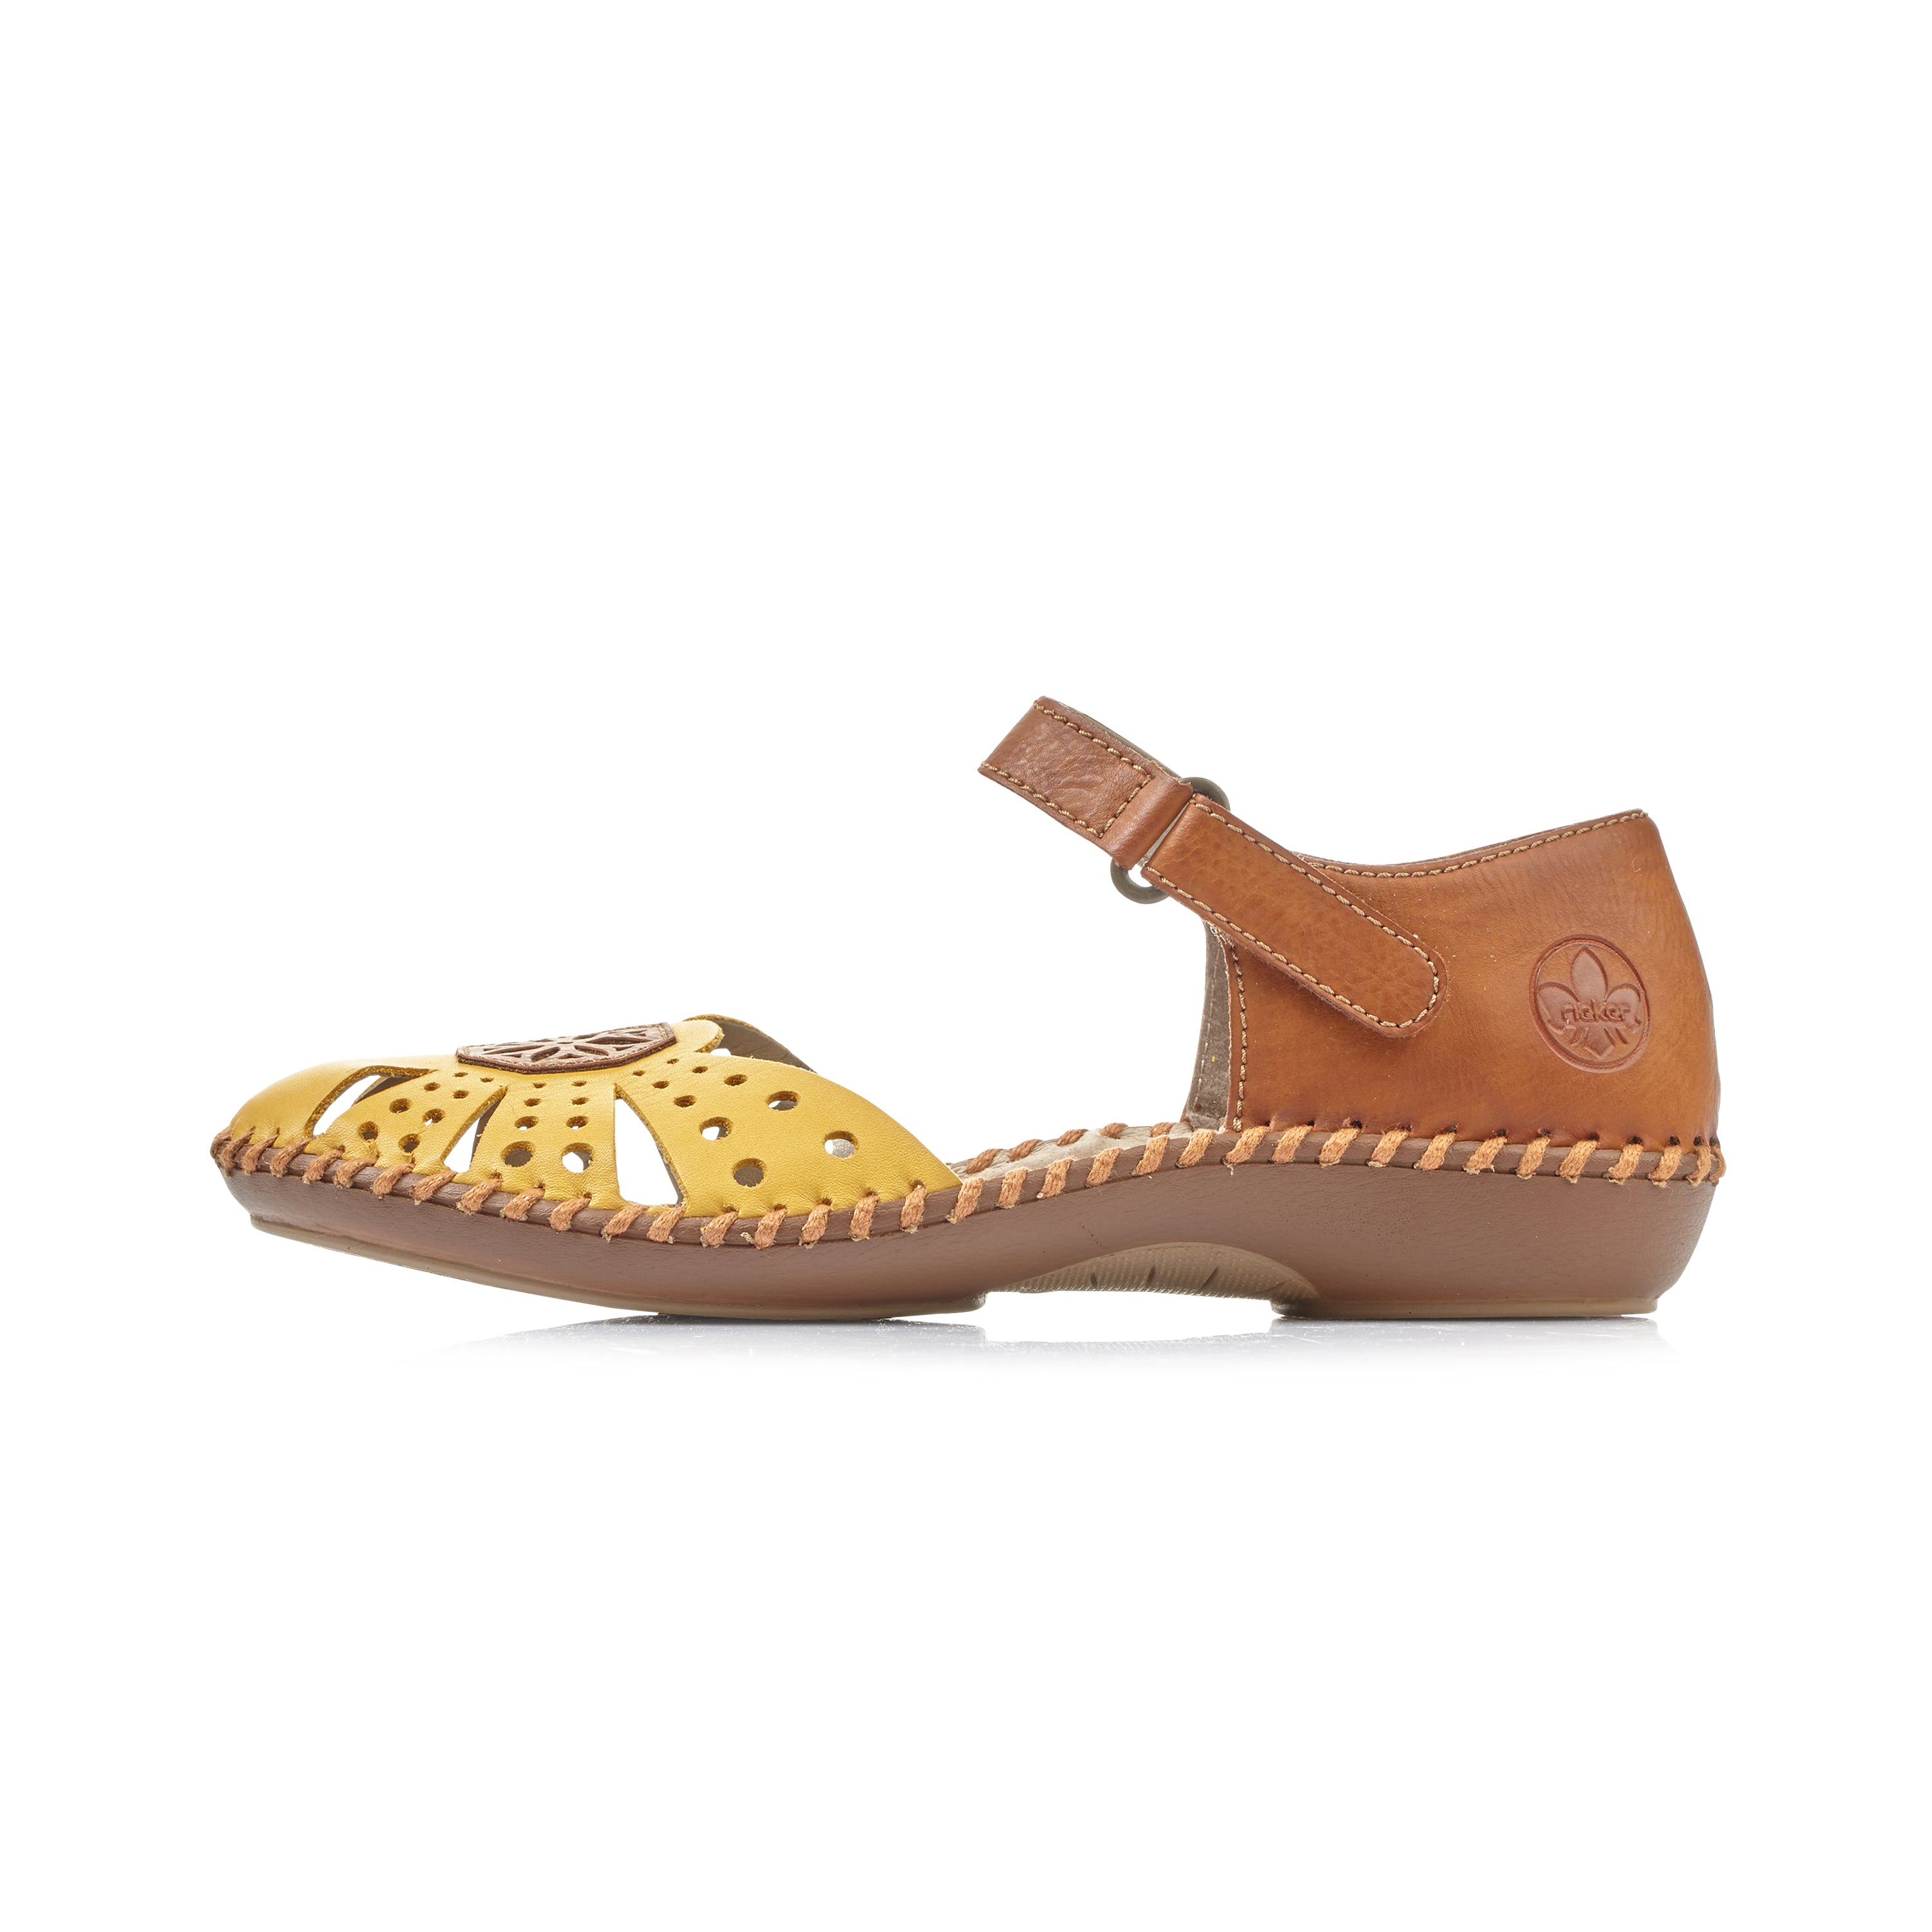 Rieker M1666-69 Ladies Yellow/Tan Summer Sandals/Shoes